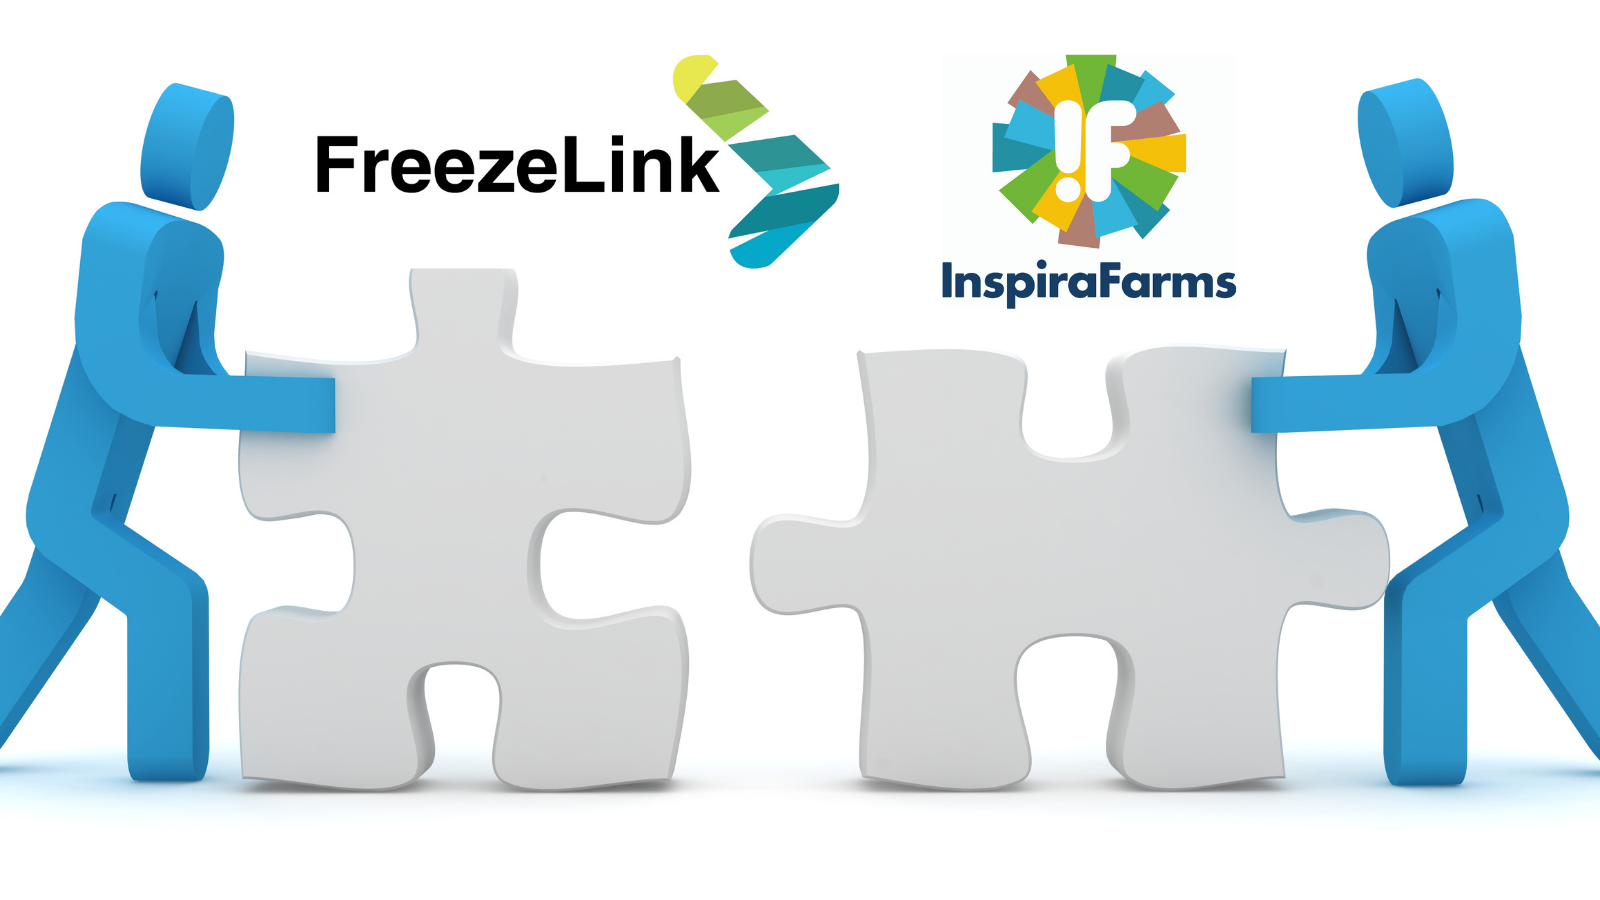 Freezelink and InspiraFarms Partnership